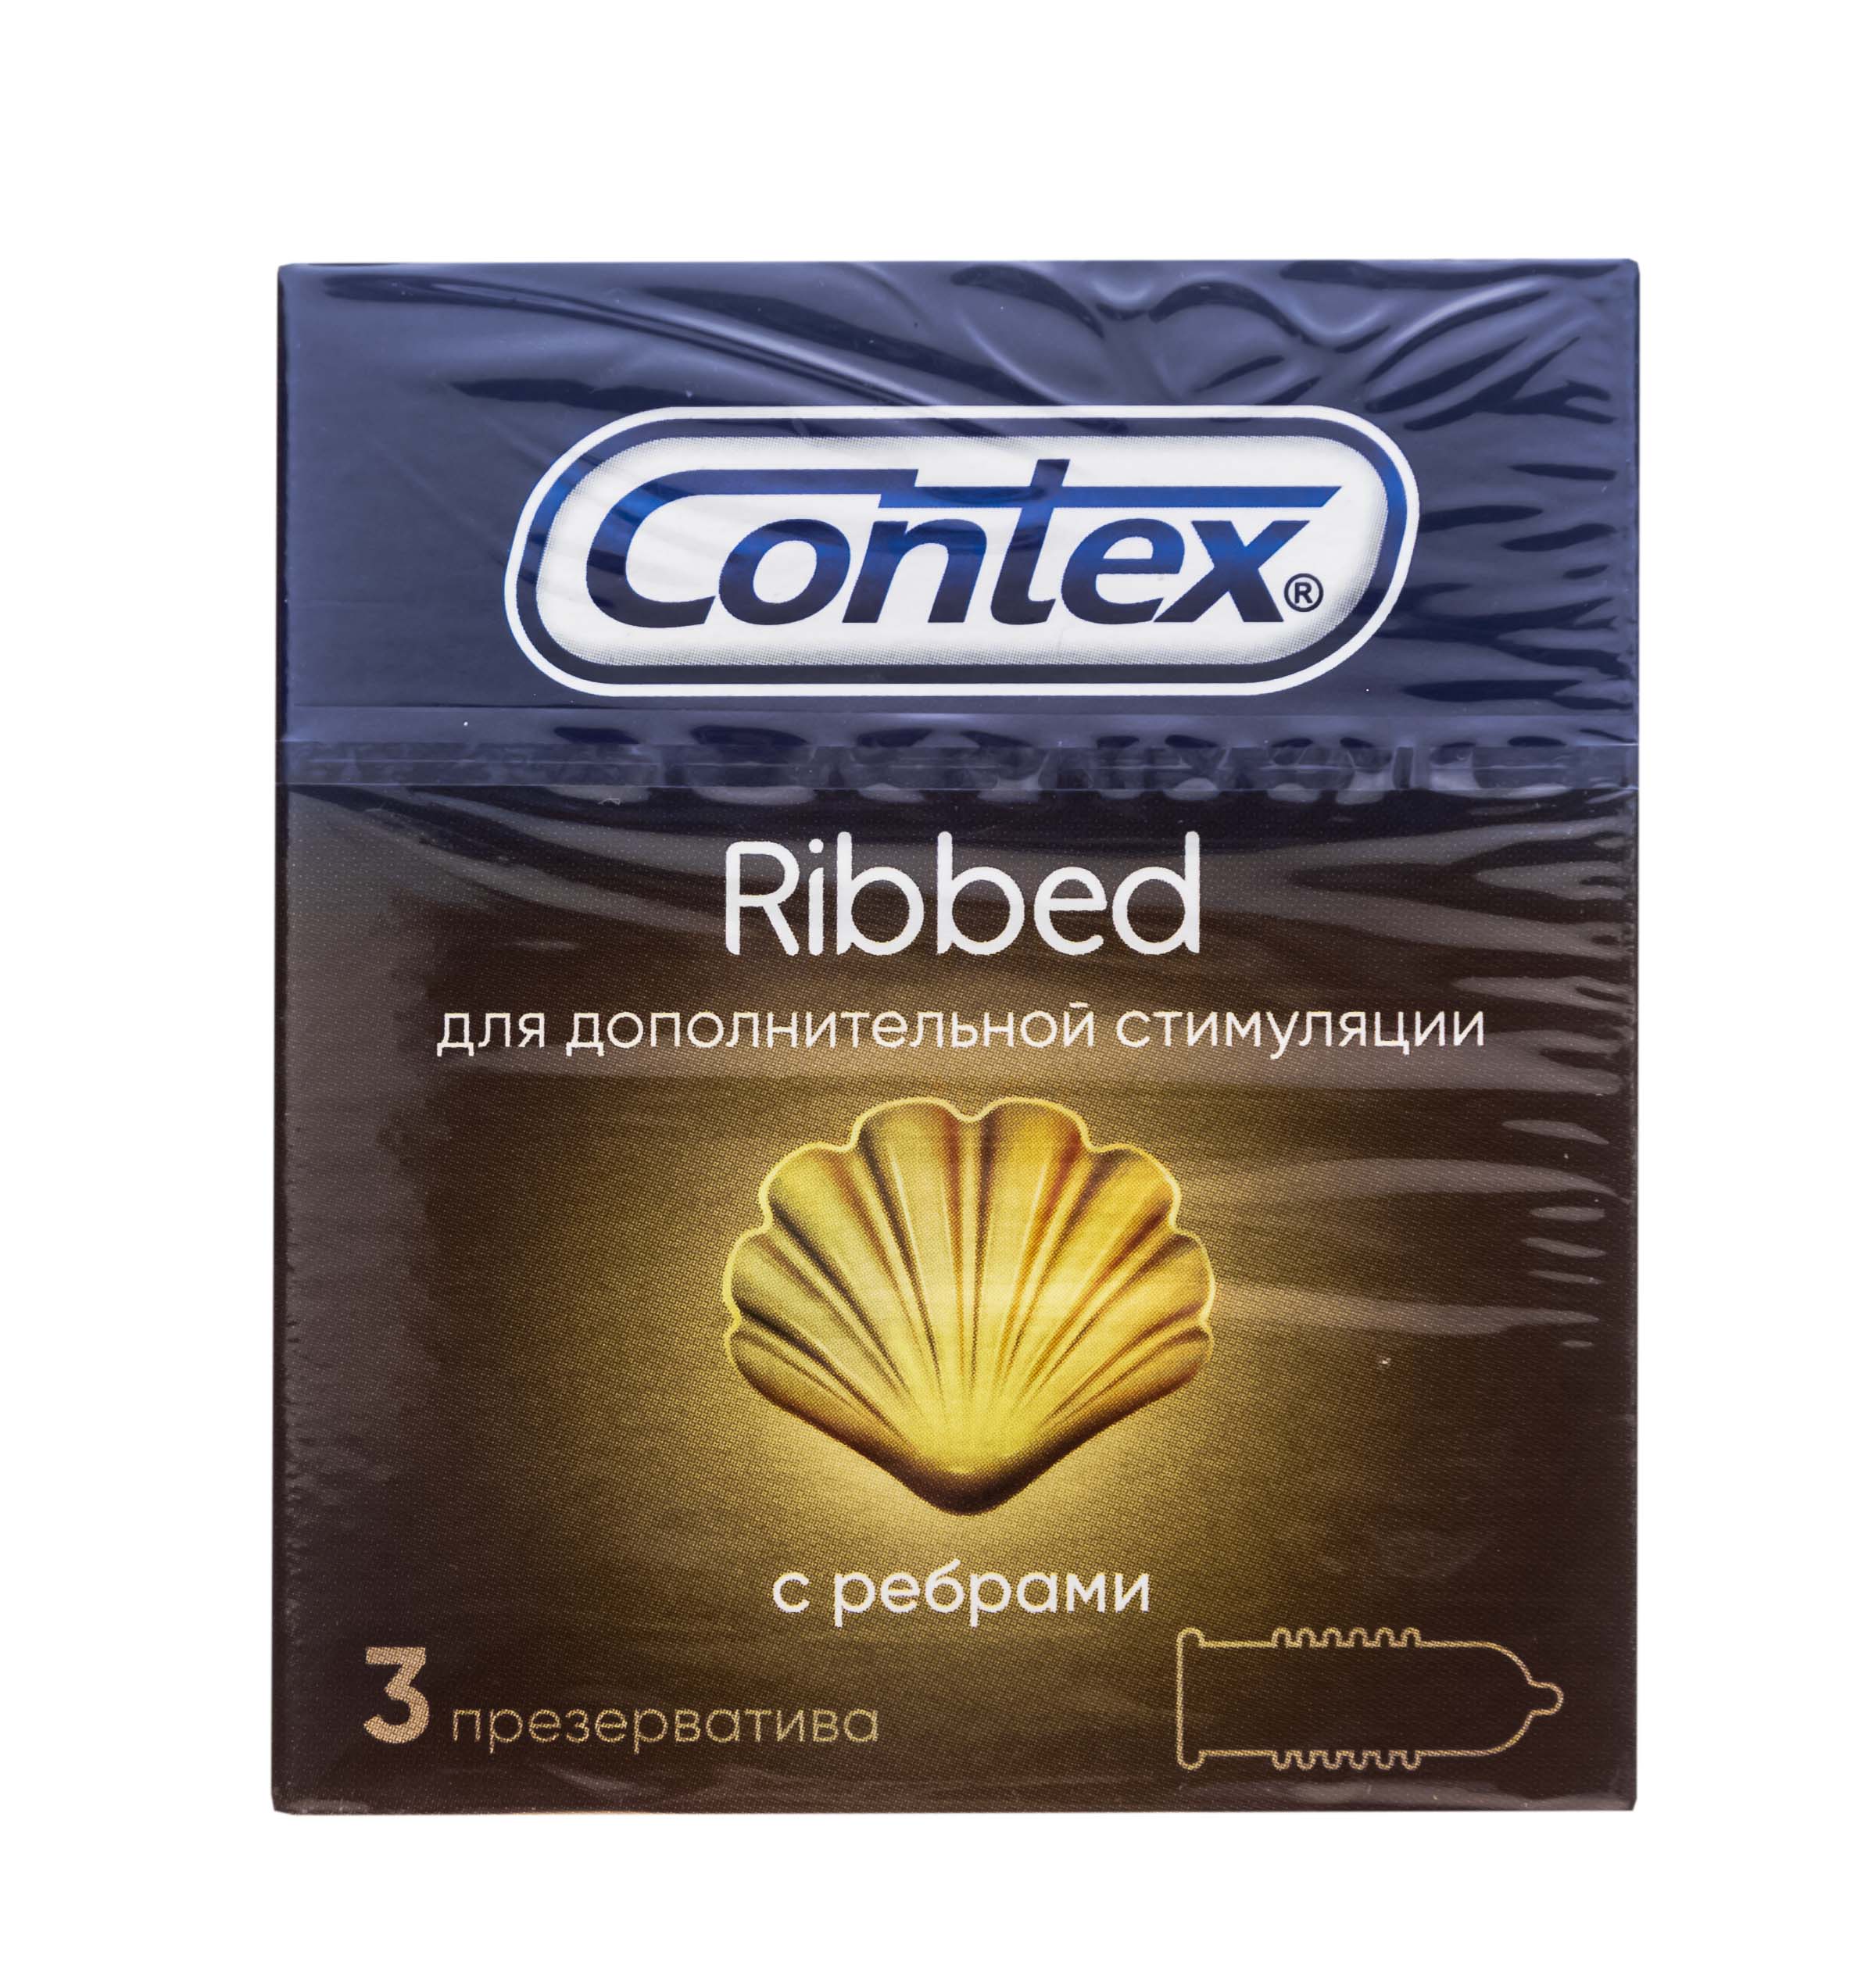 Contex Презервативы Ribbed ребристые, №3 (Contex, Презервативы) цена и фото